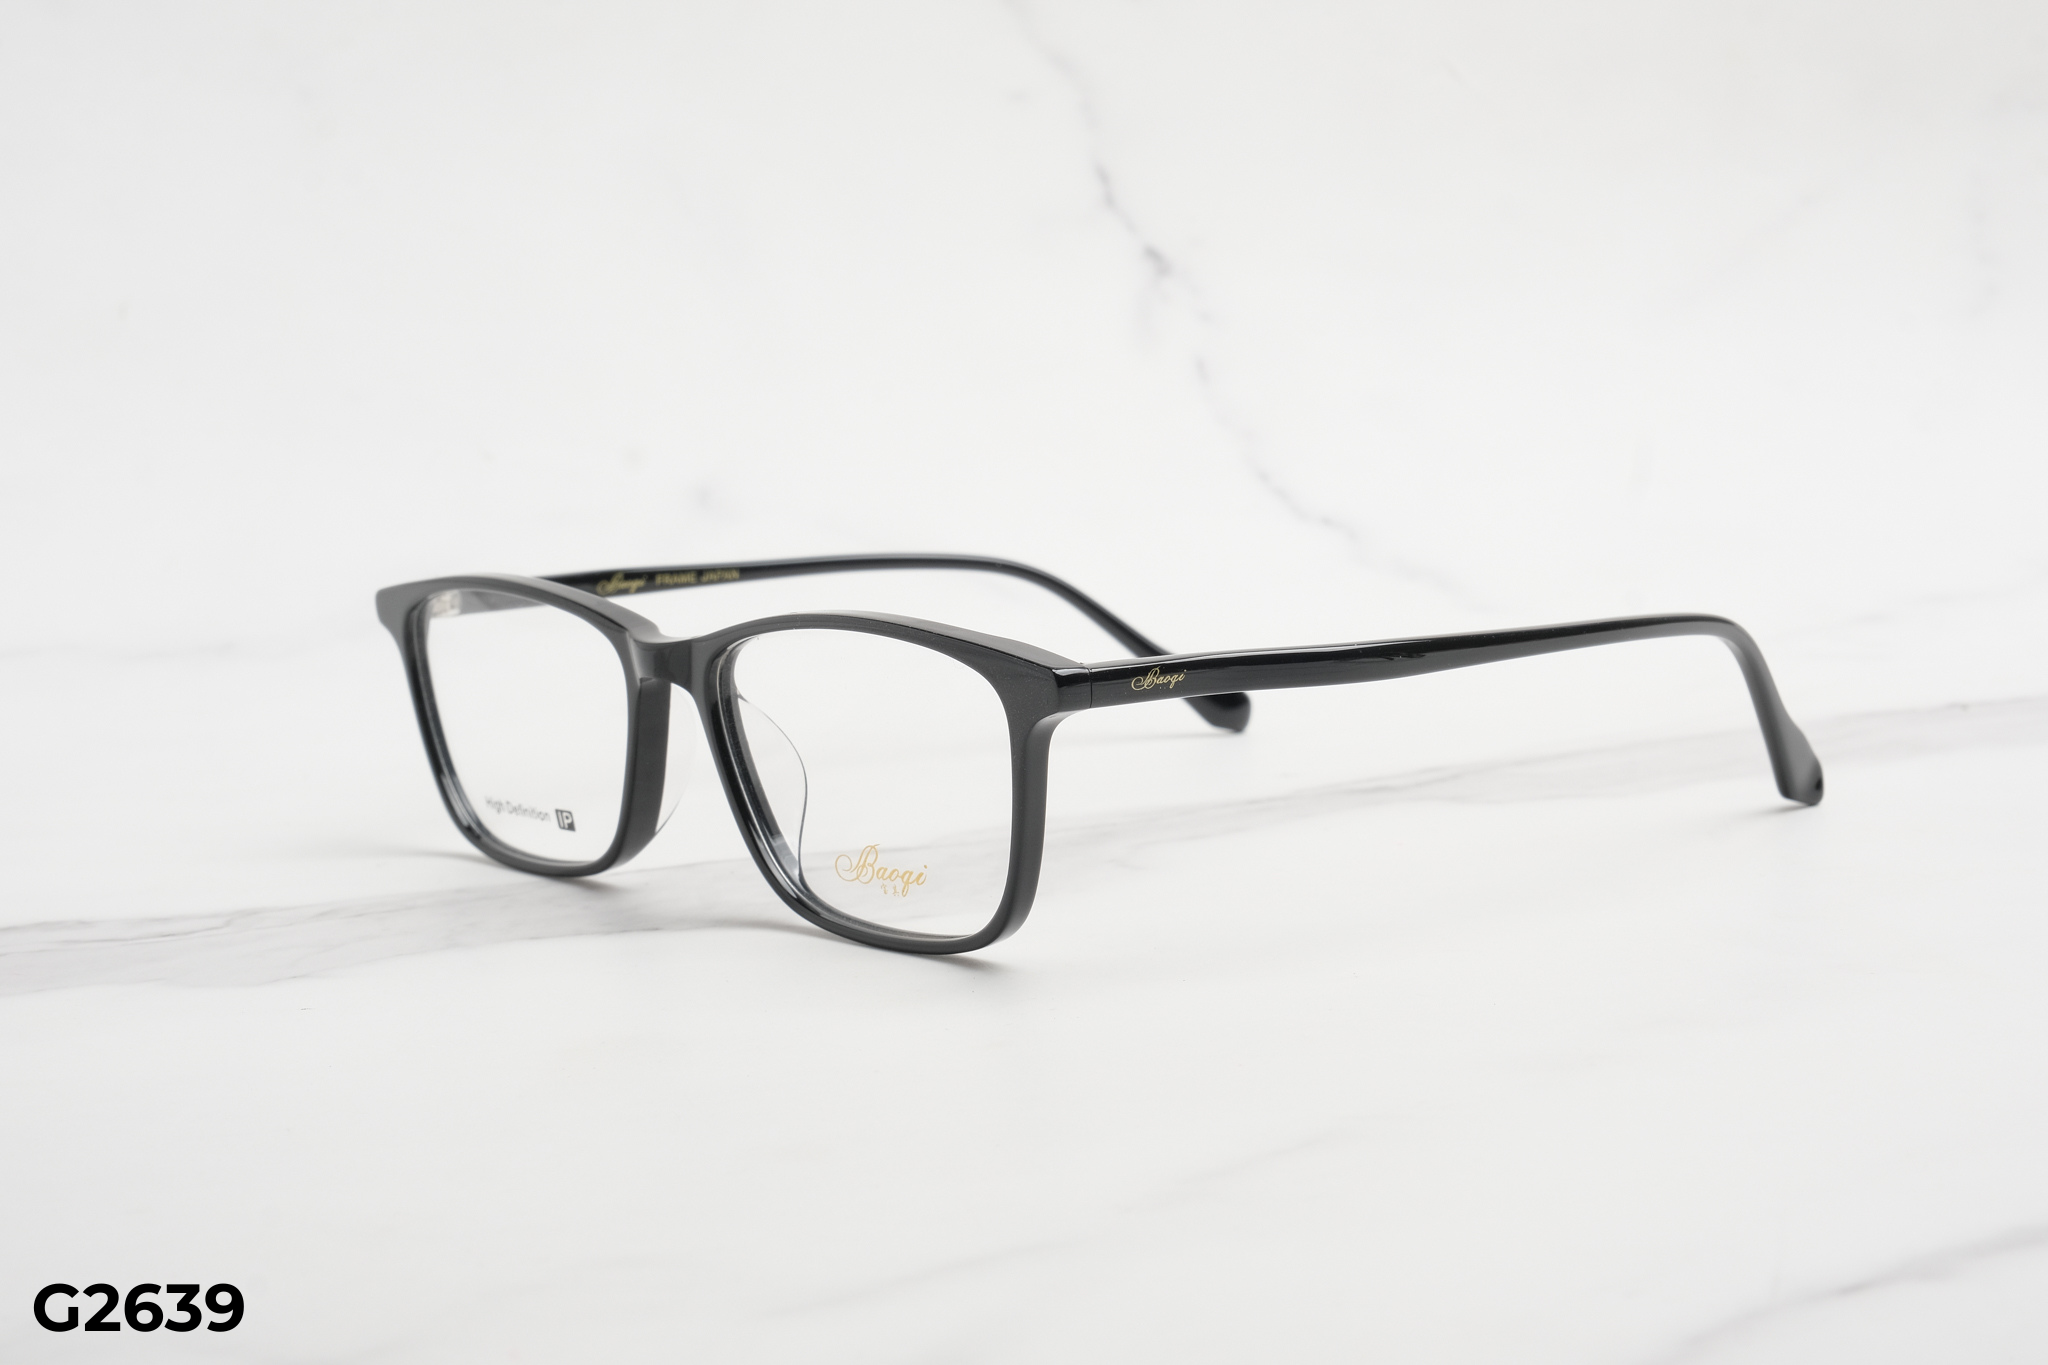  SHADY Eyewear - Glasses - G2639 